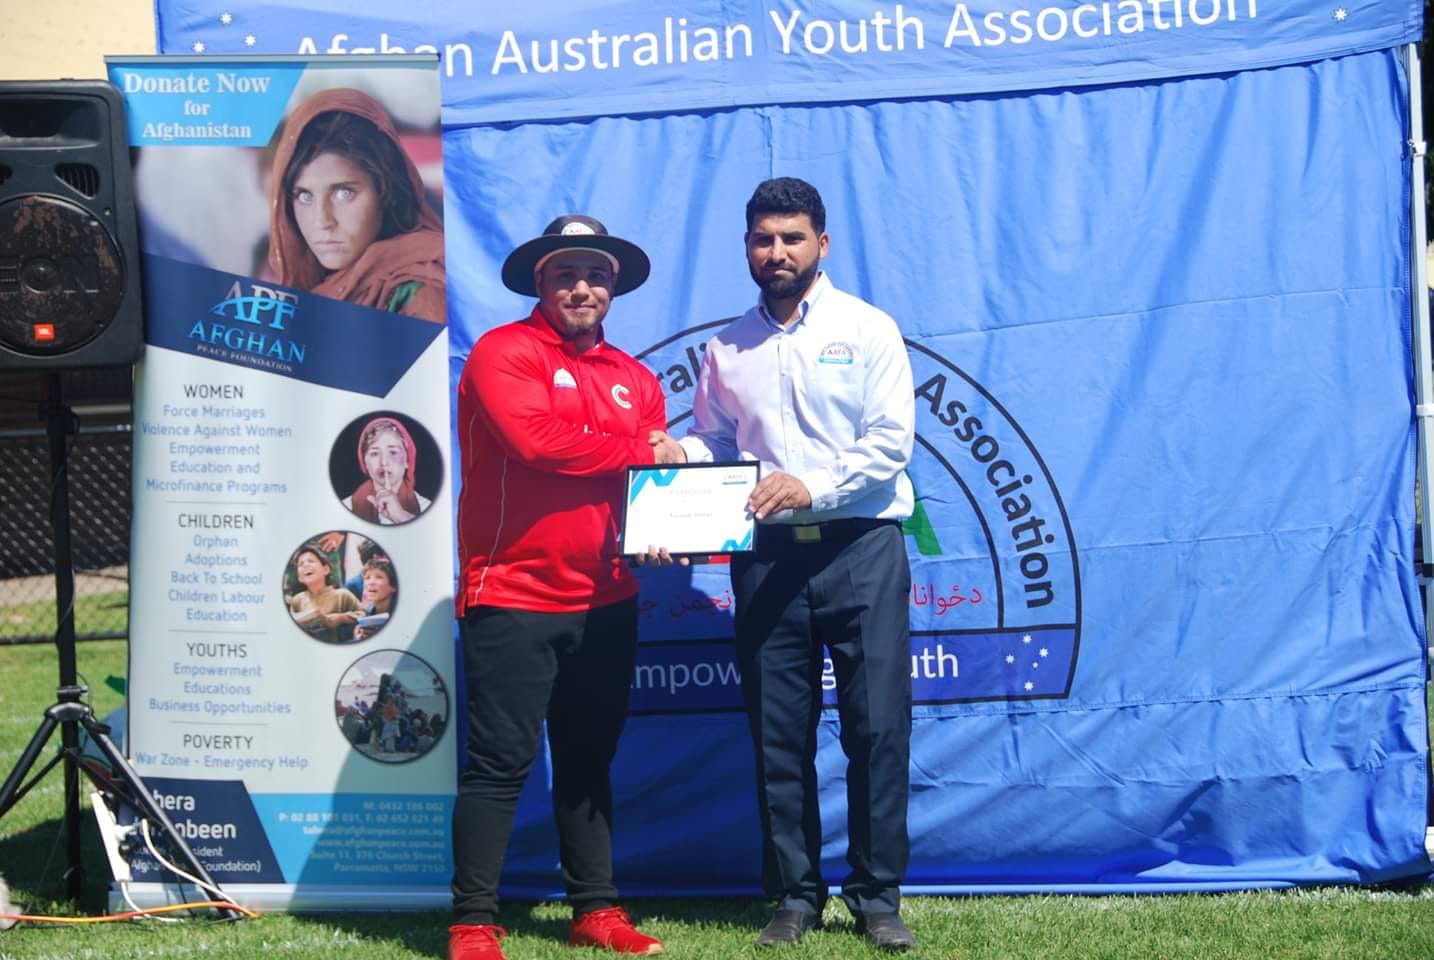 Ziaulaq Abdulrahimzai, a member of Afghan Australian Youth Association (right).